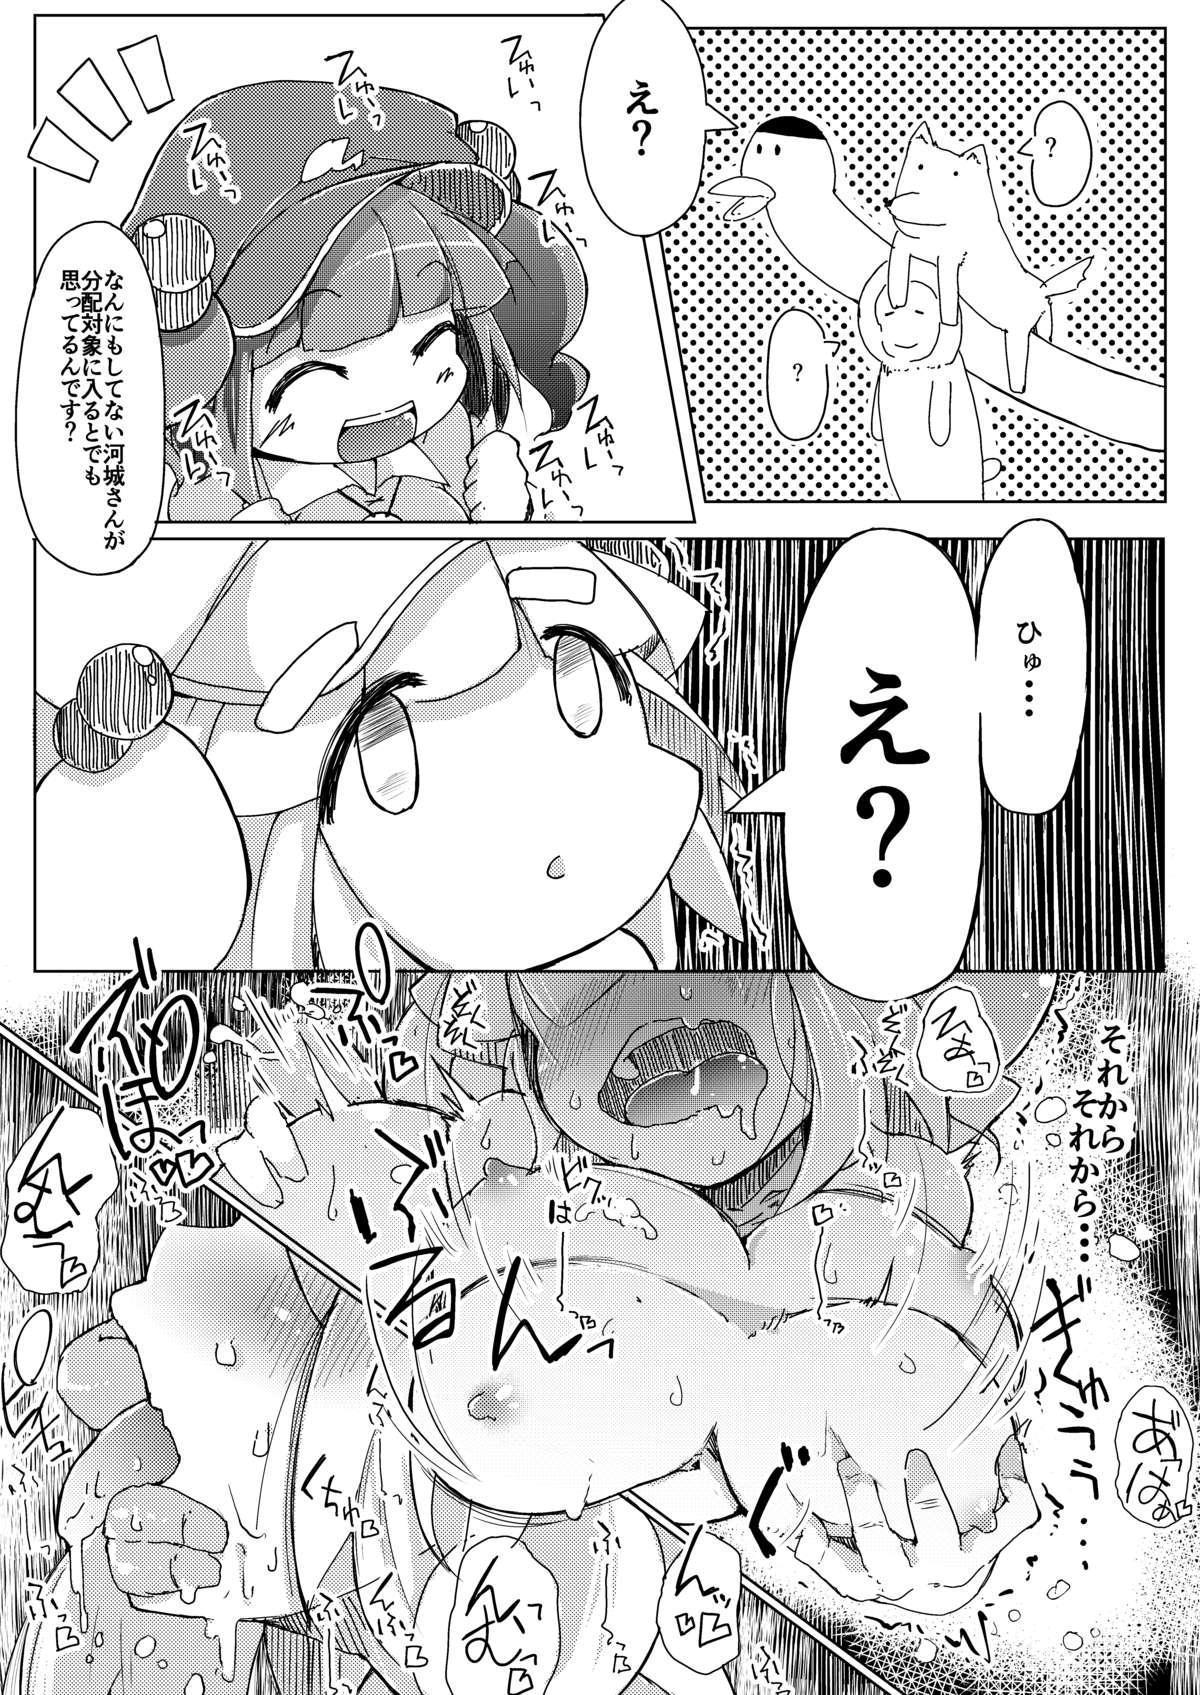 Manga Kawashiro Folktale 27